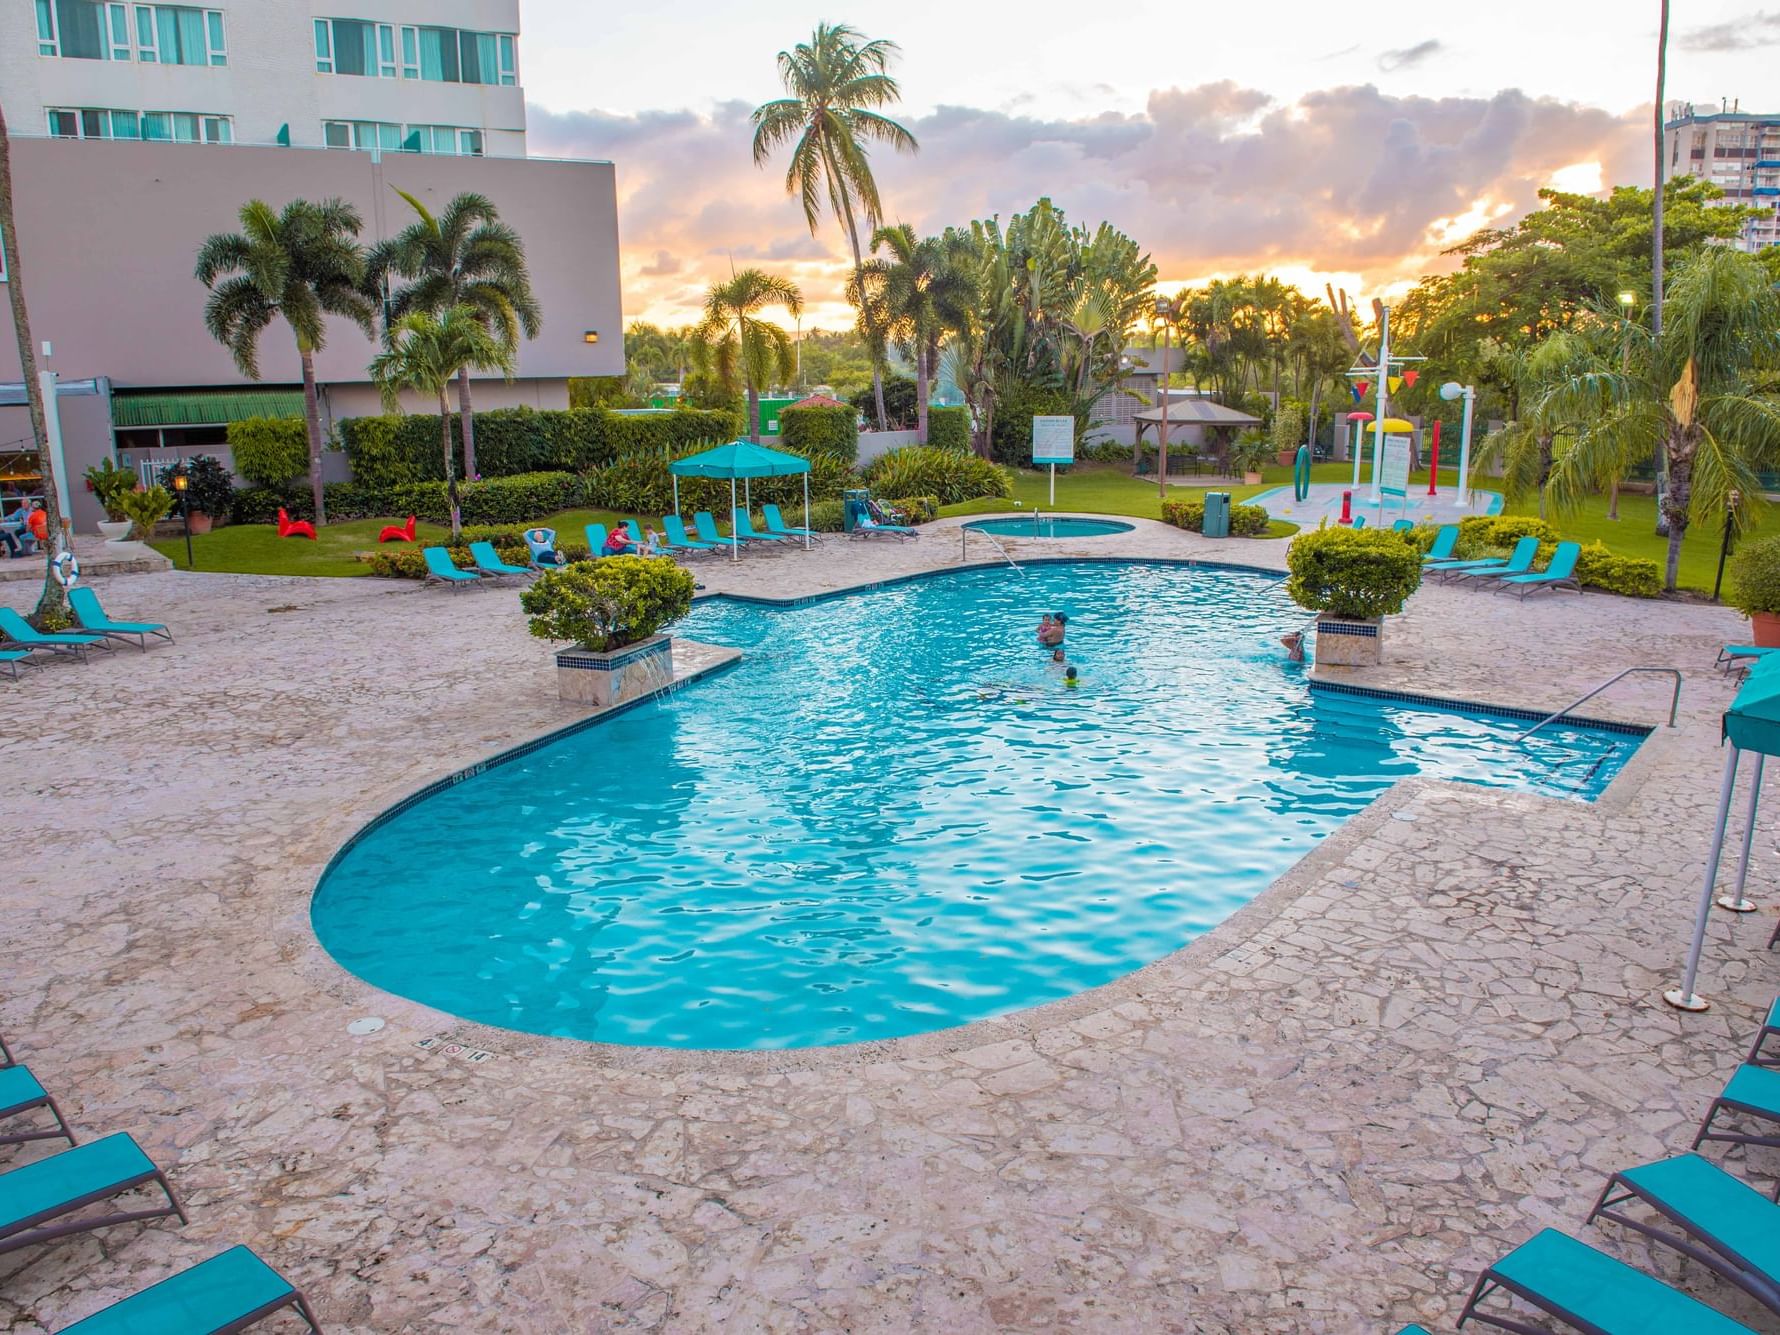 Verdanza Hotel Pool